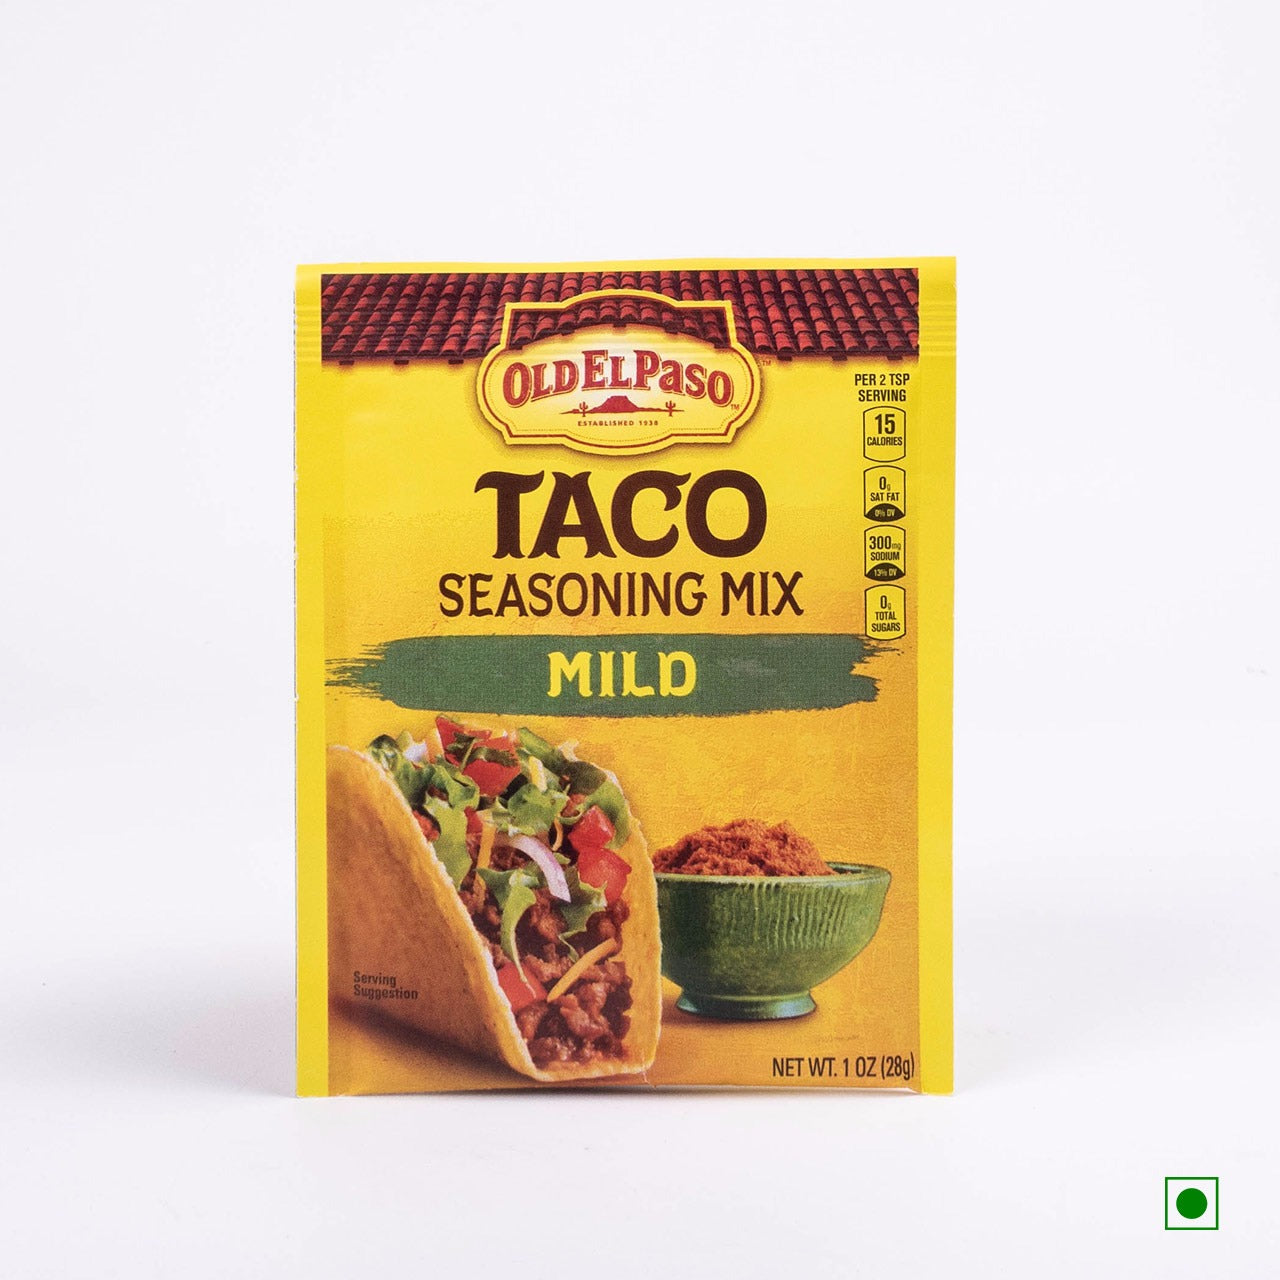 Taco Seasoning Mix Mild